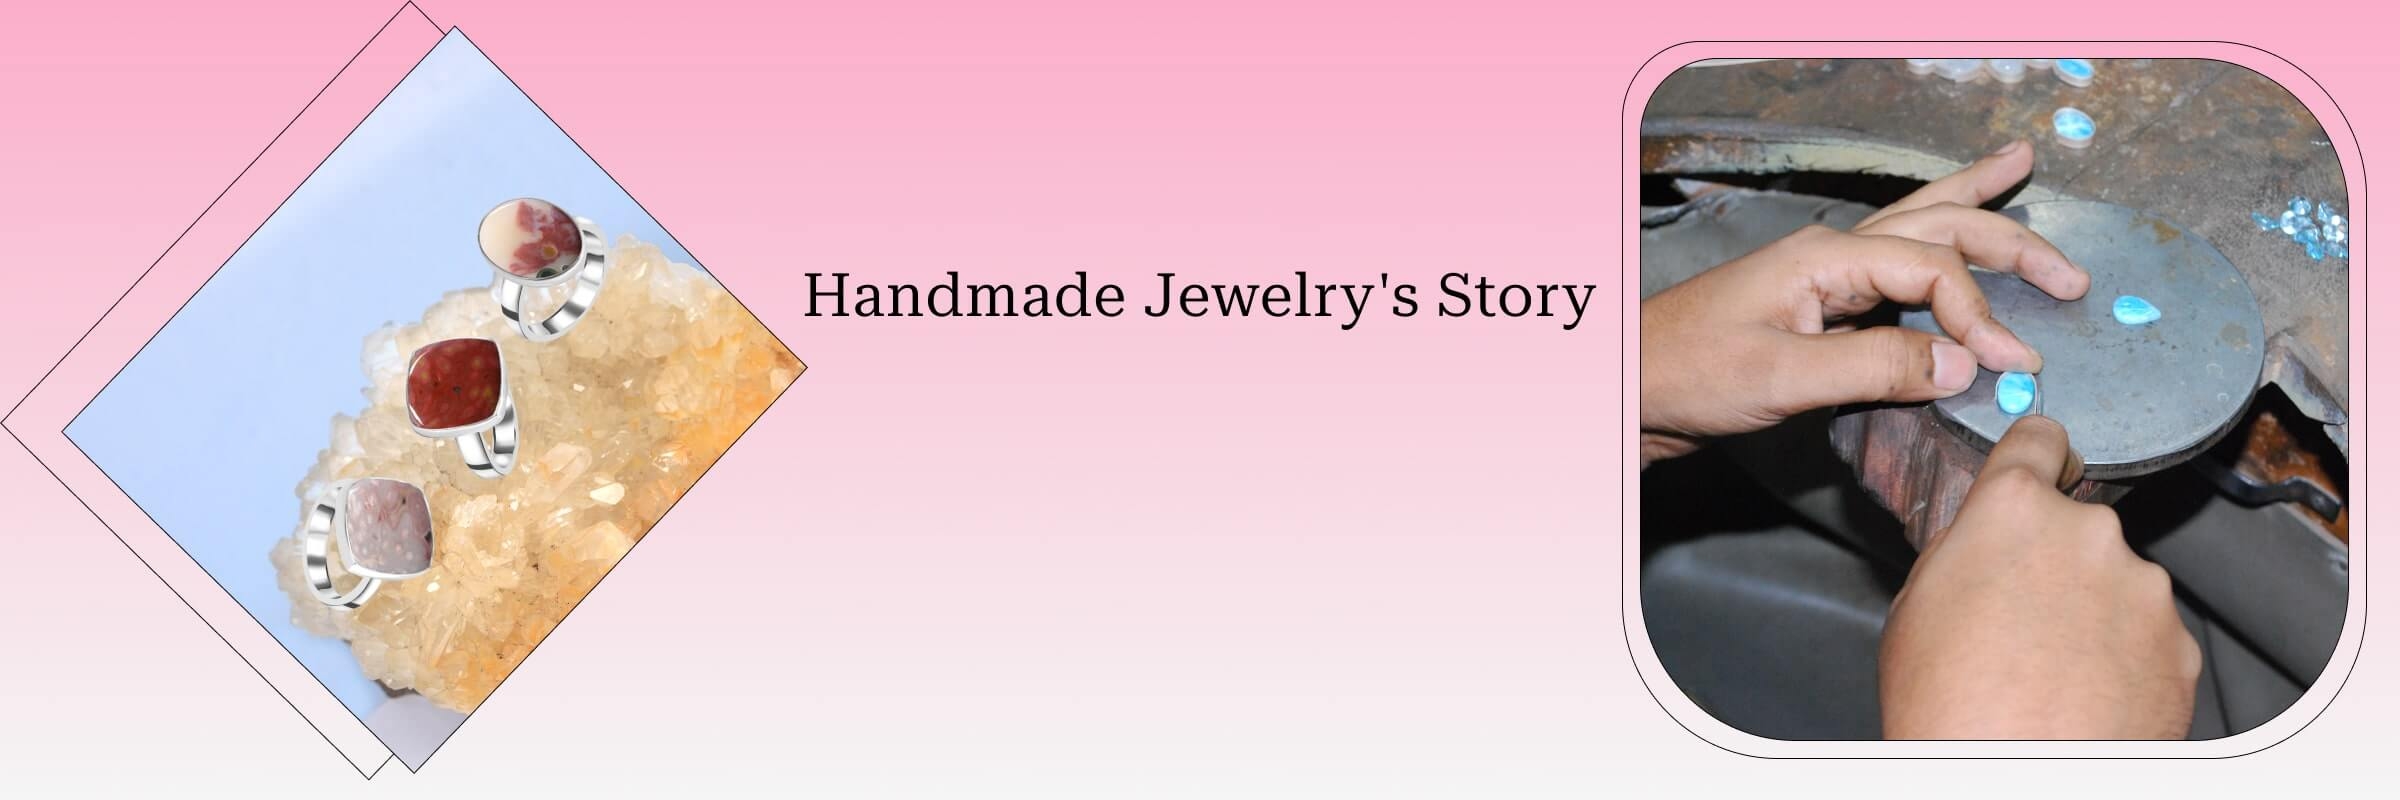 History of Handmade Jewelry